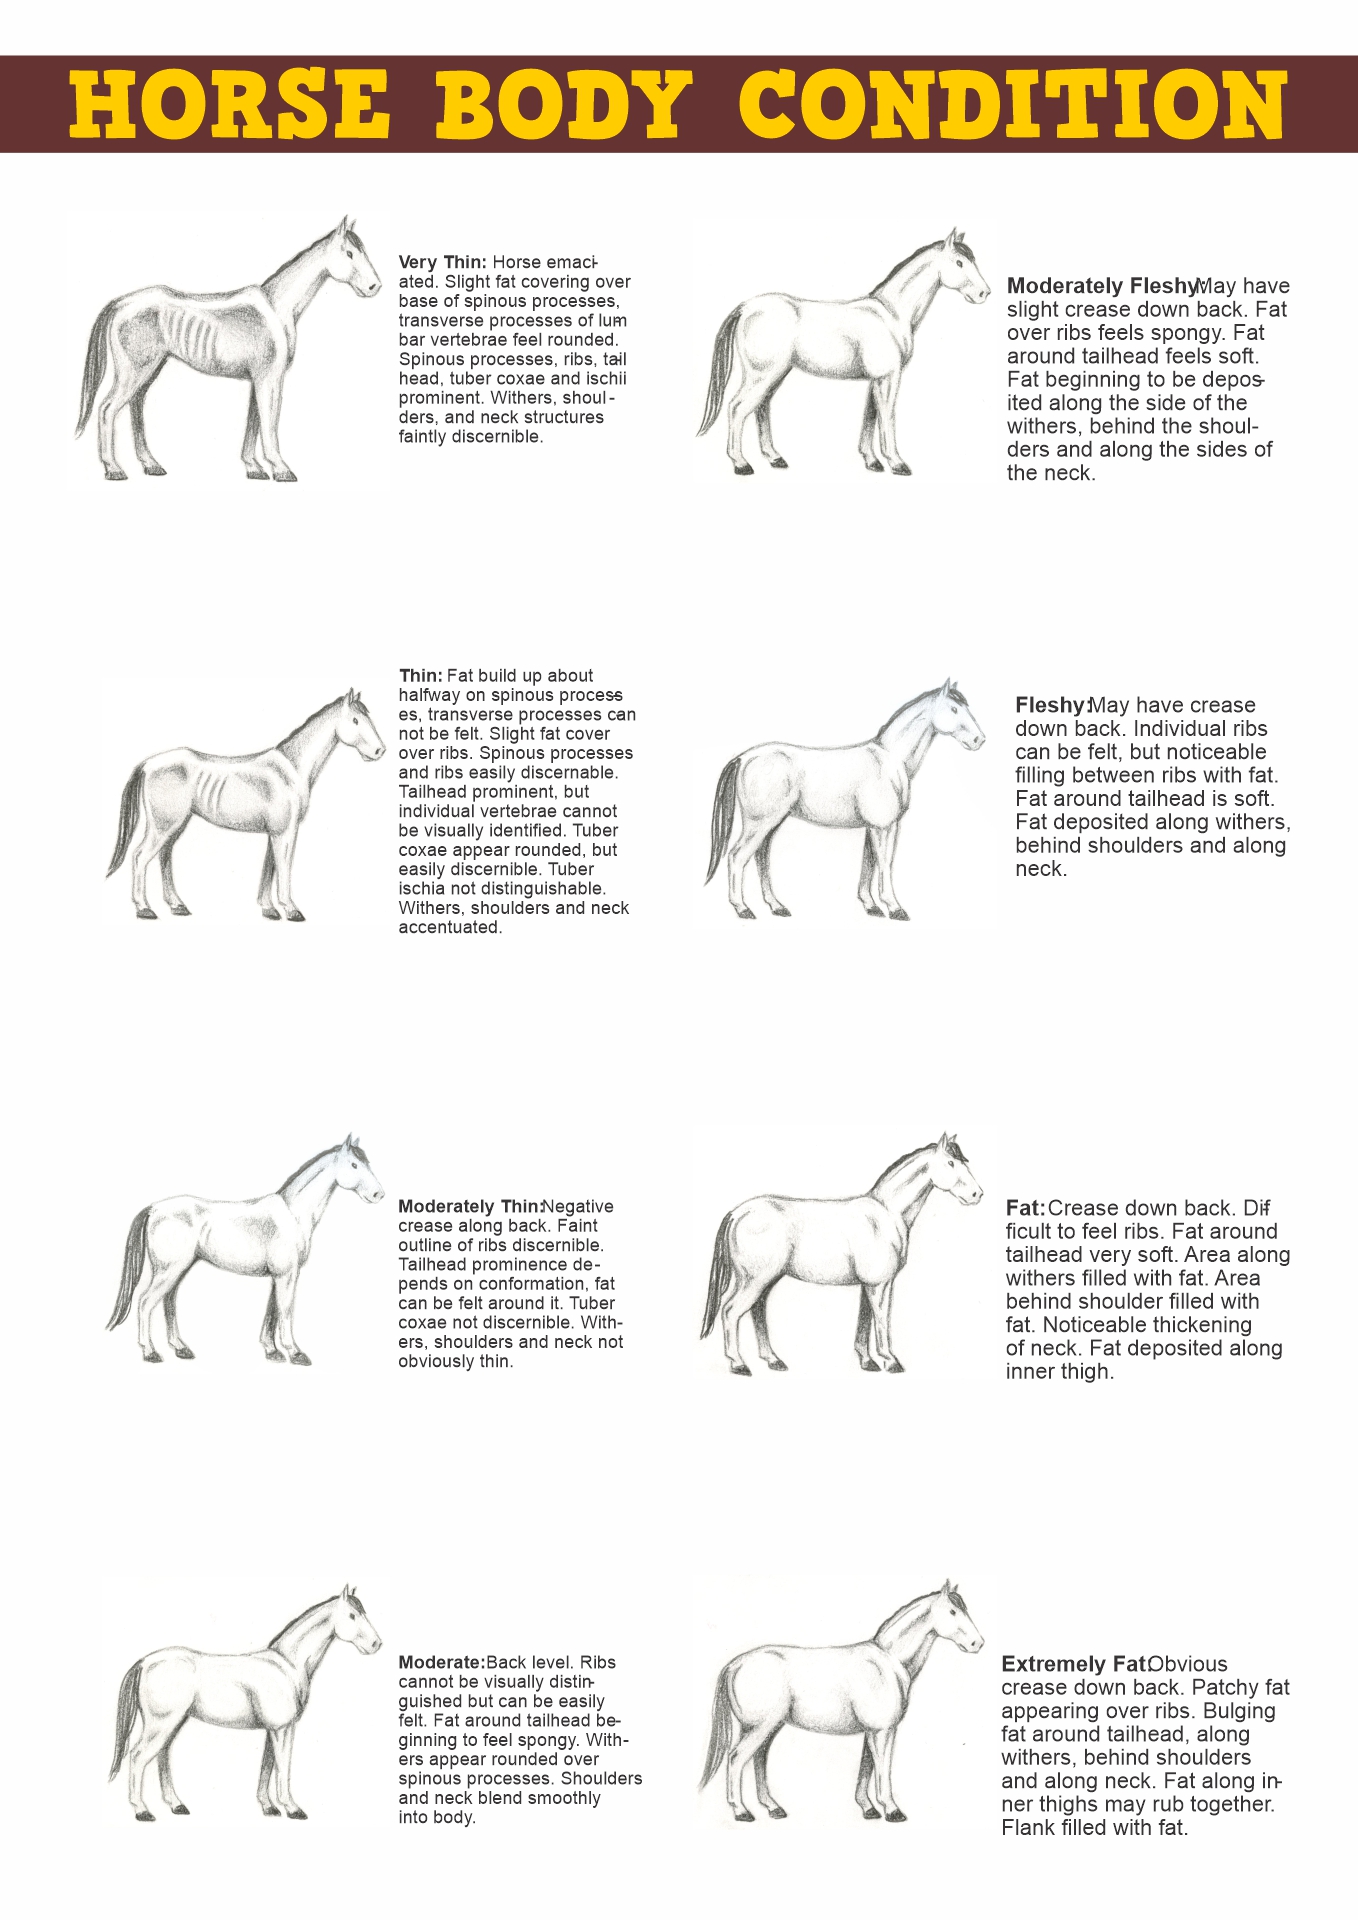 Horse Body Condition Score Chart Image